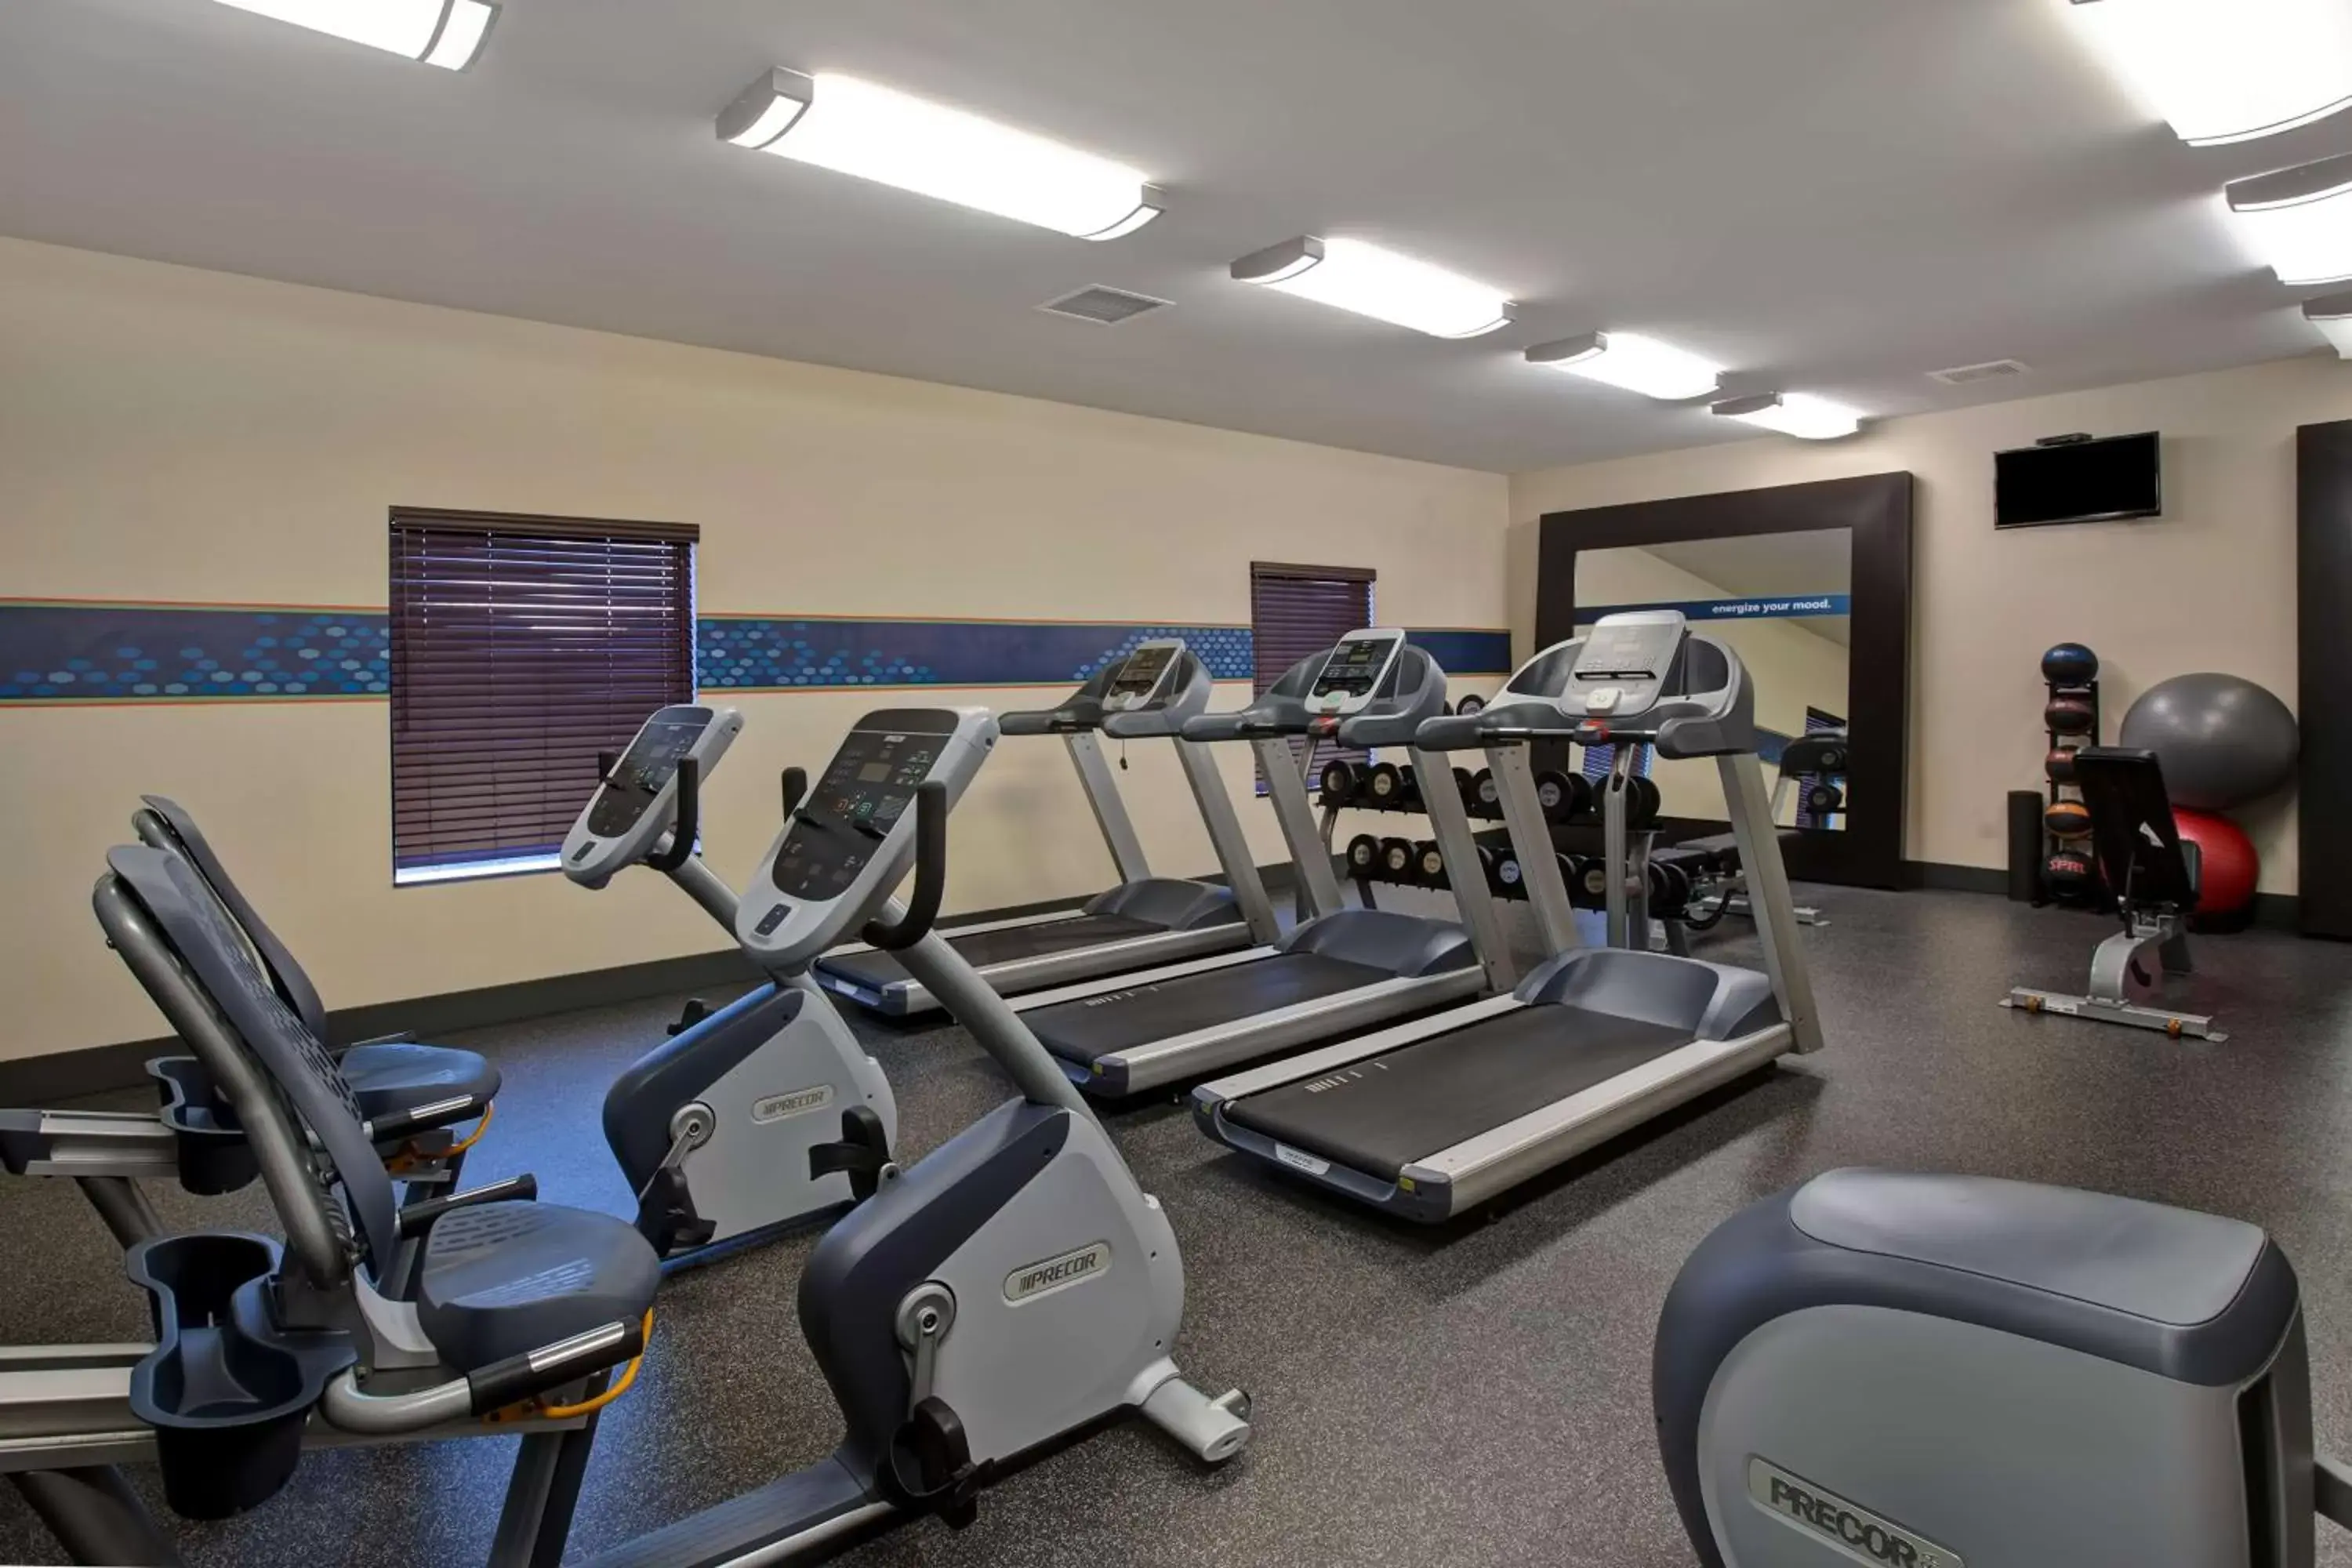 Fitness centre/facilities, Fitness Center/Facilities in Hampton Inn Dekalb - Near the University